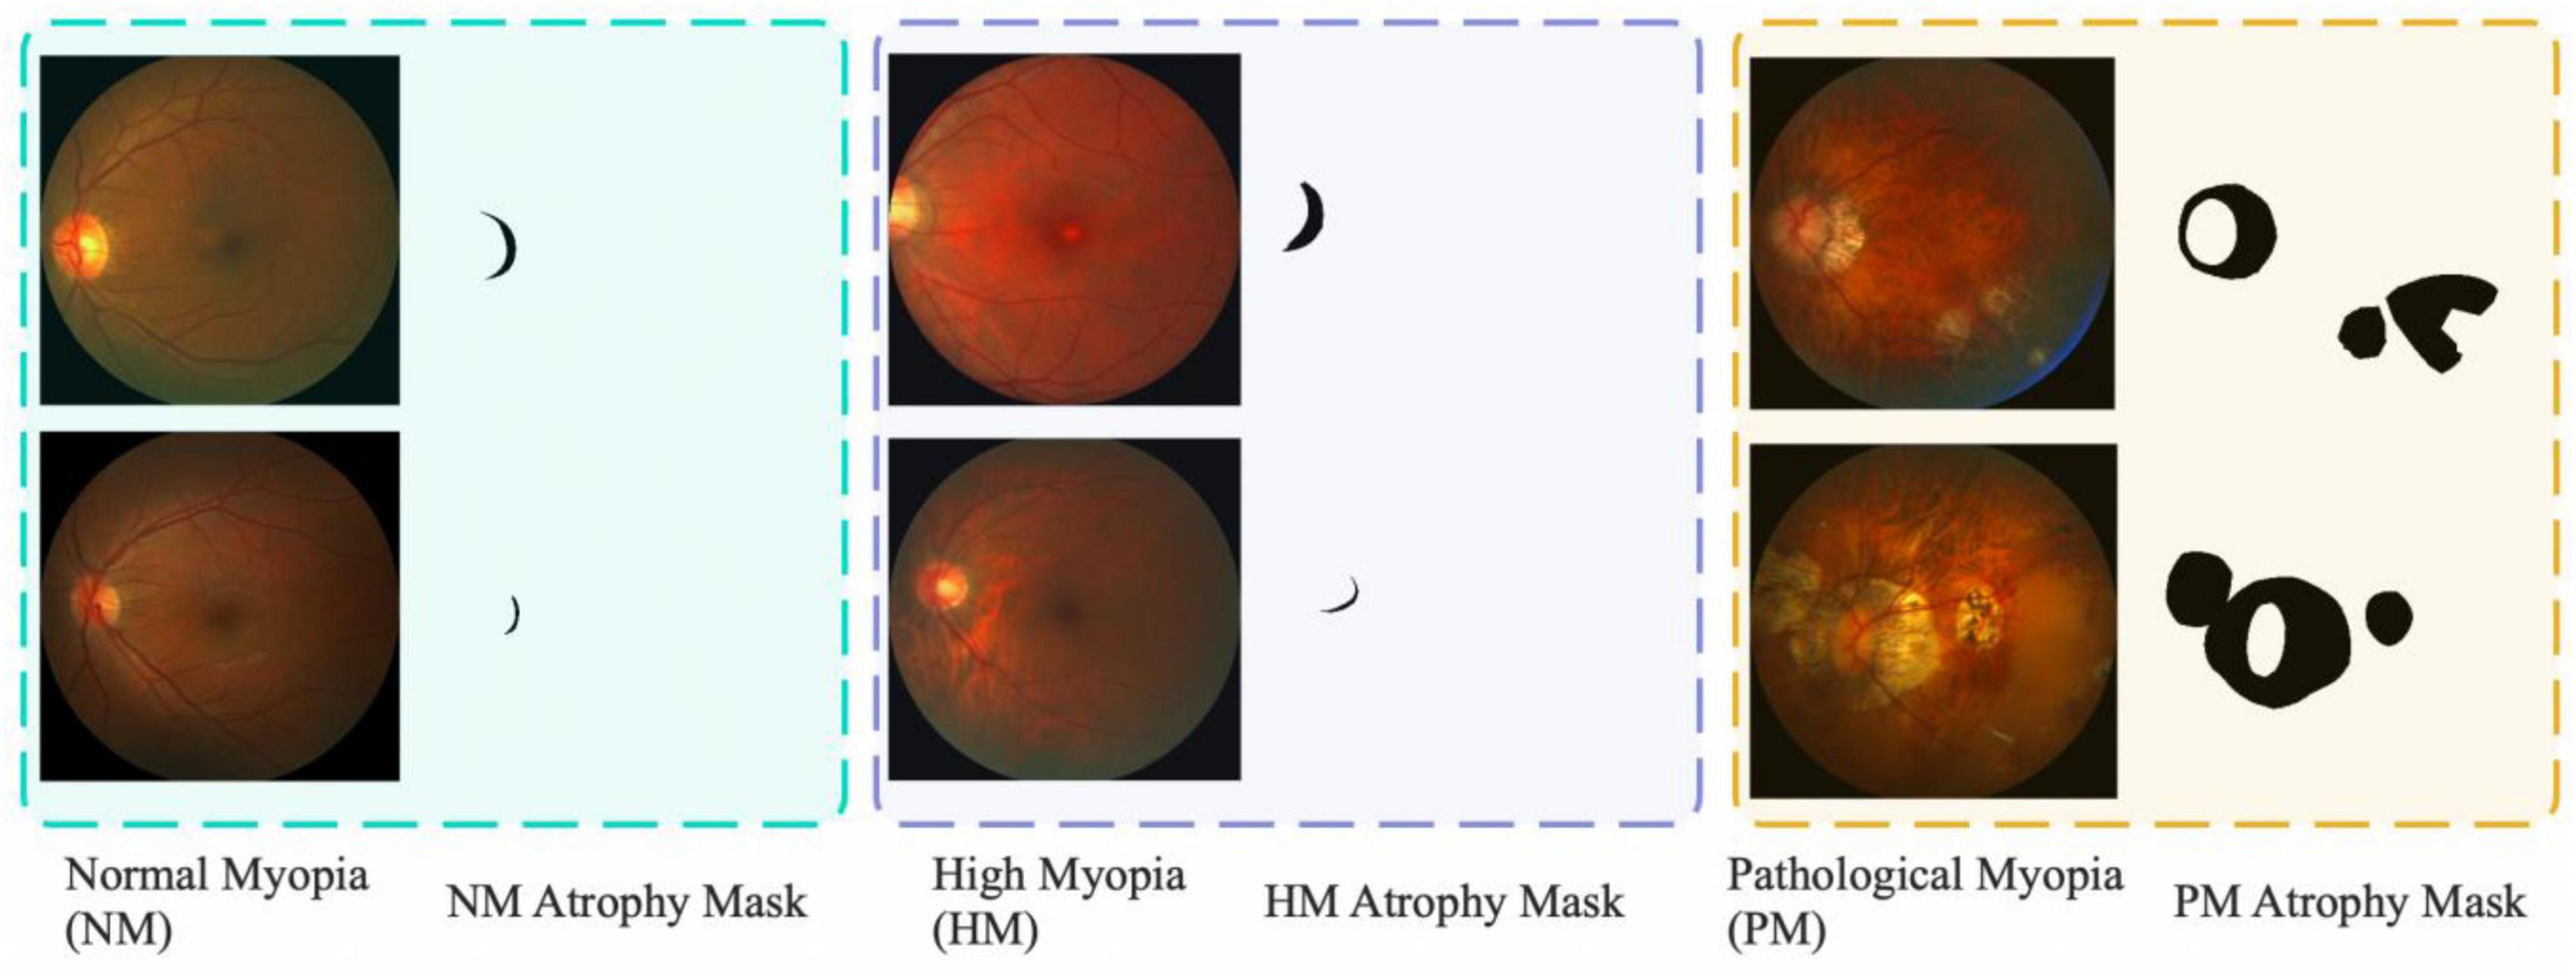 MyopiaDETR: End-to-end pathological myopia detection based on transformer using 2D fundus images